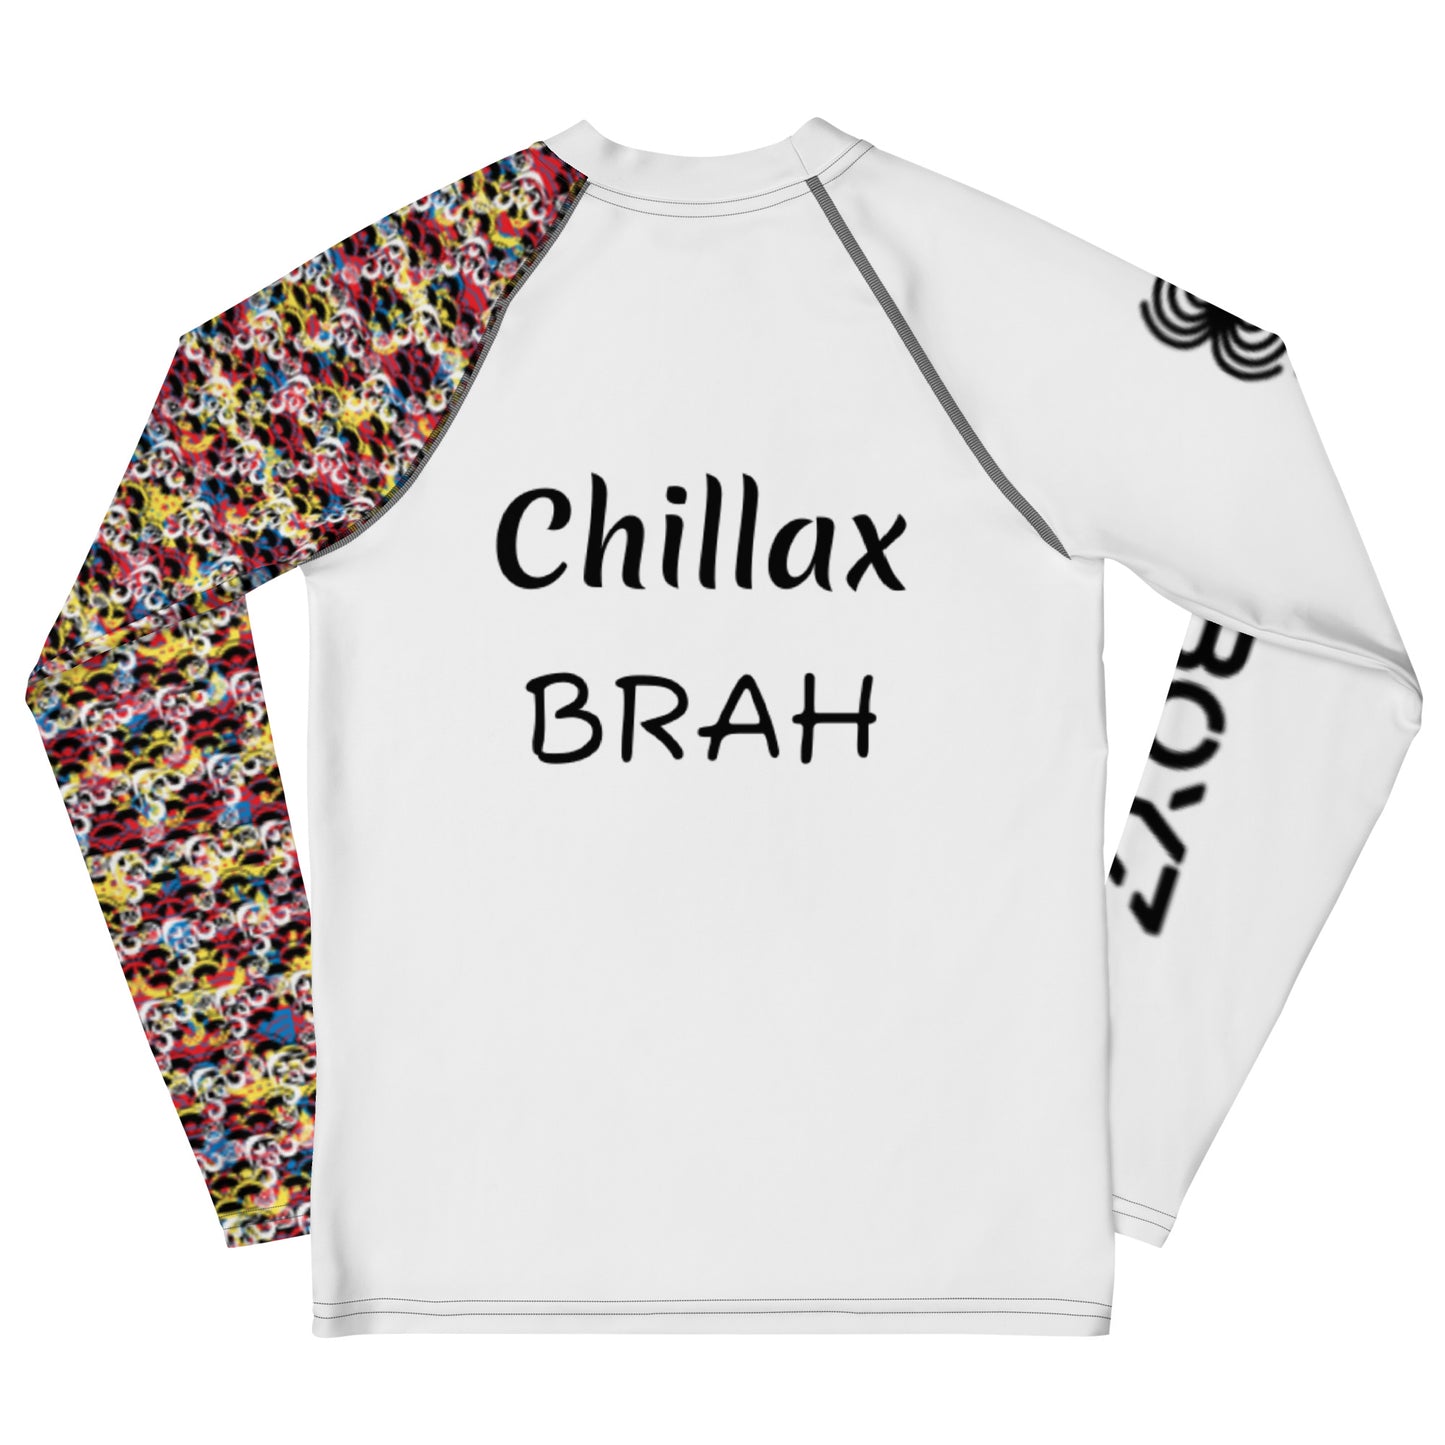 「Chillax Brah」ユースボーイズサーフレッシュガード（ホワイト）